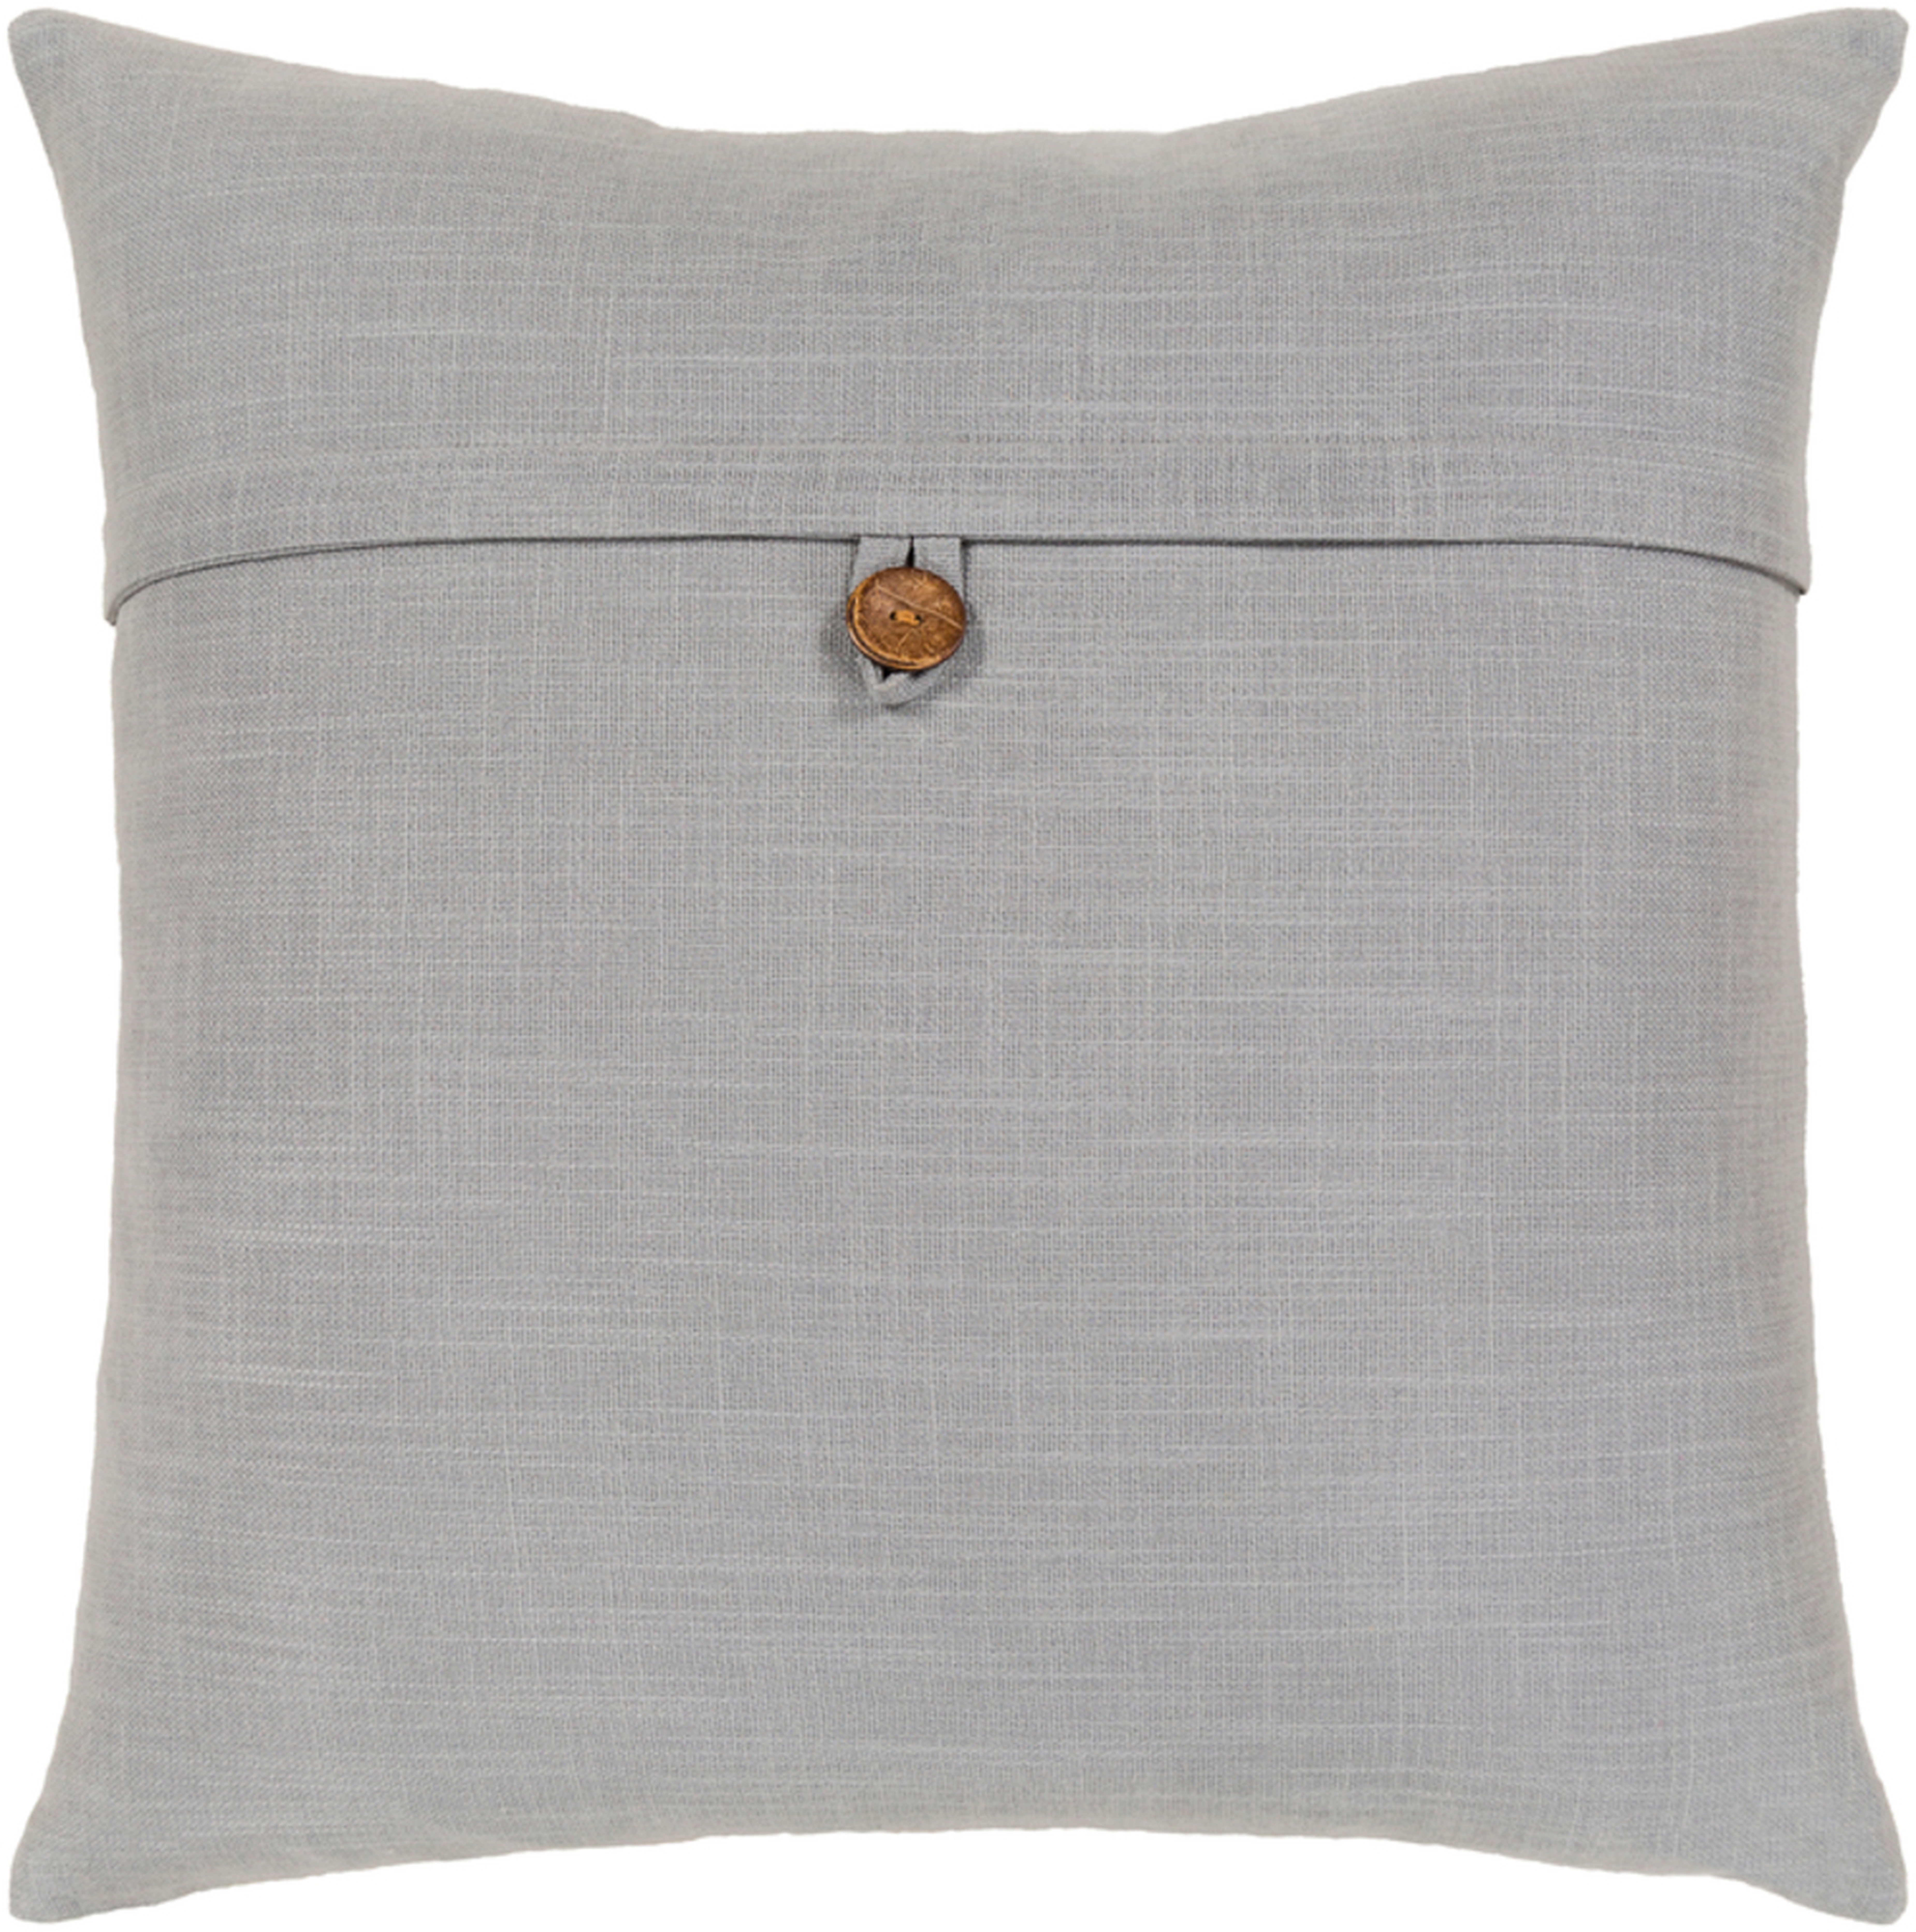 Perine Pillow Cover, 18" x 18", Light Gray - Cove Goods